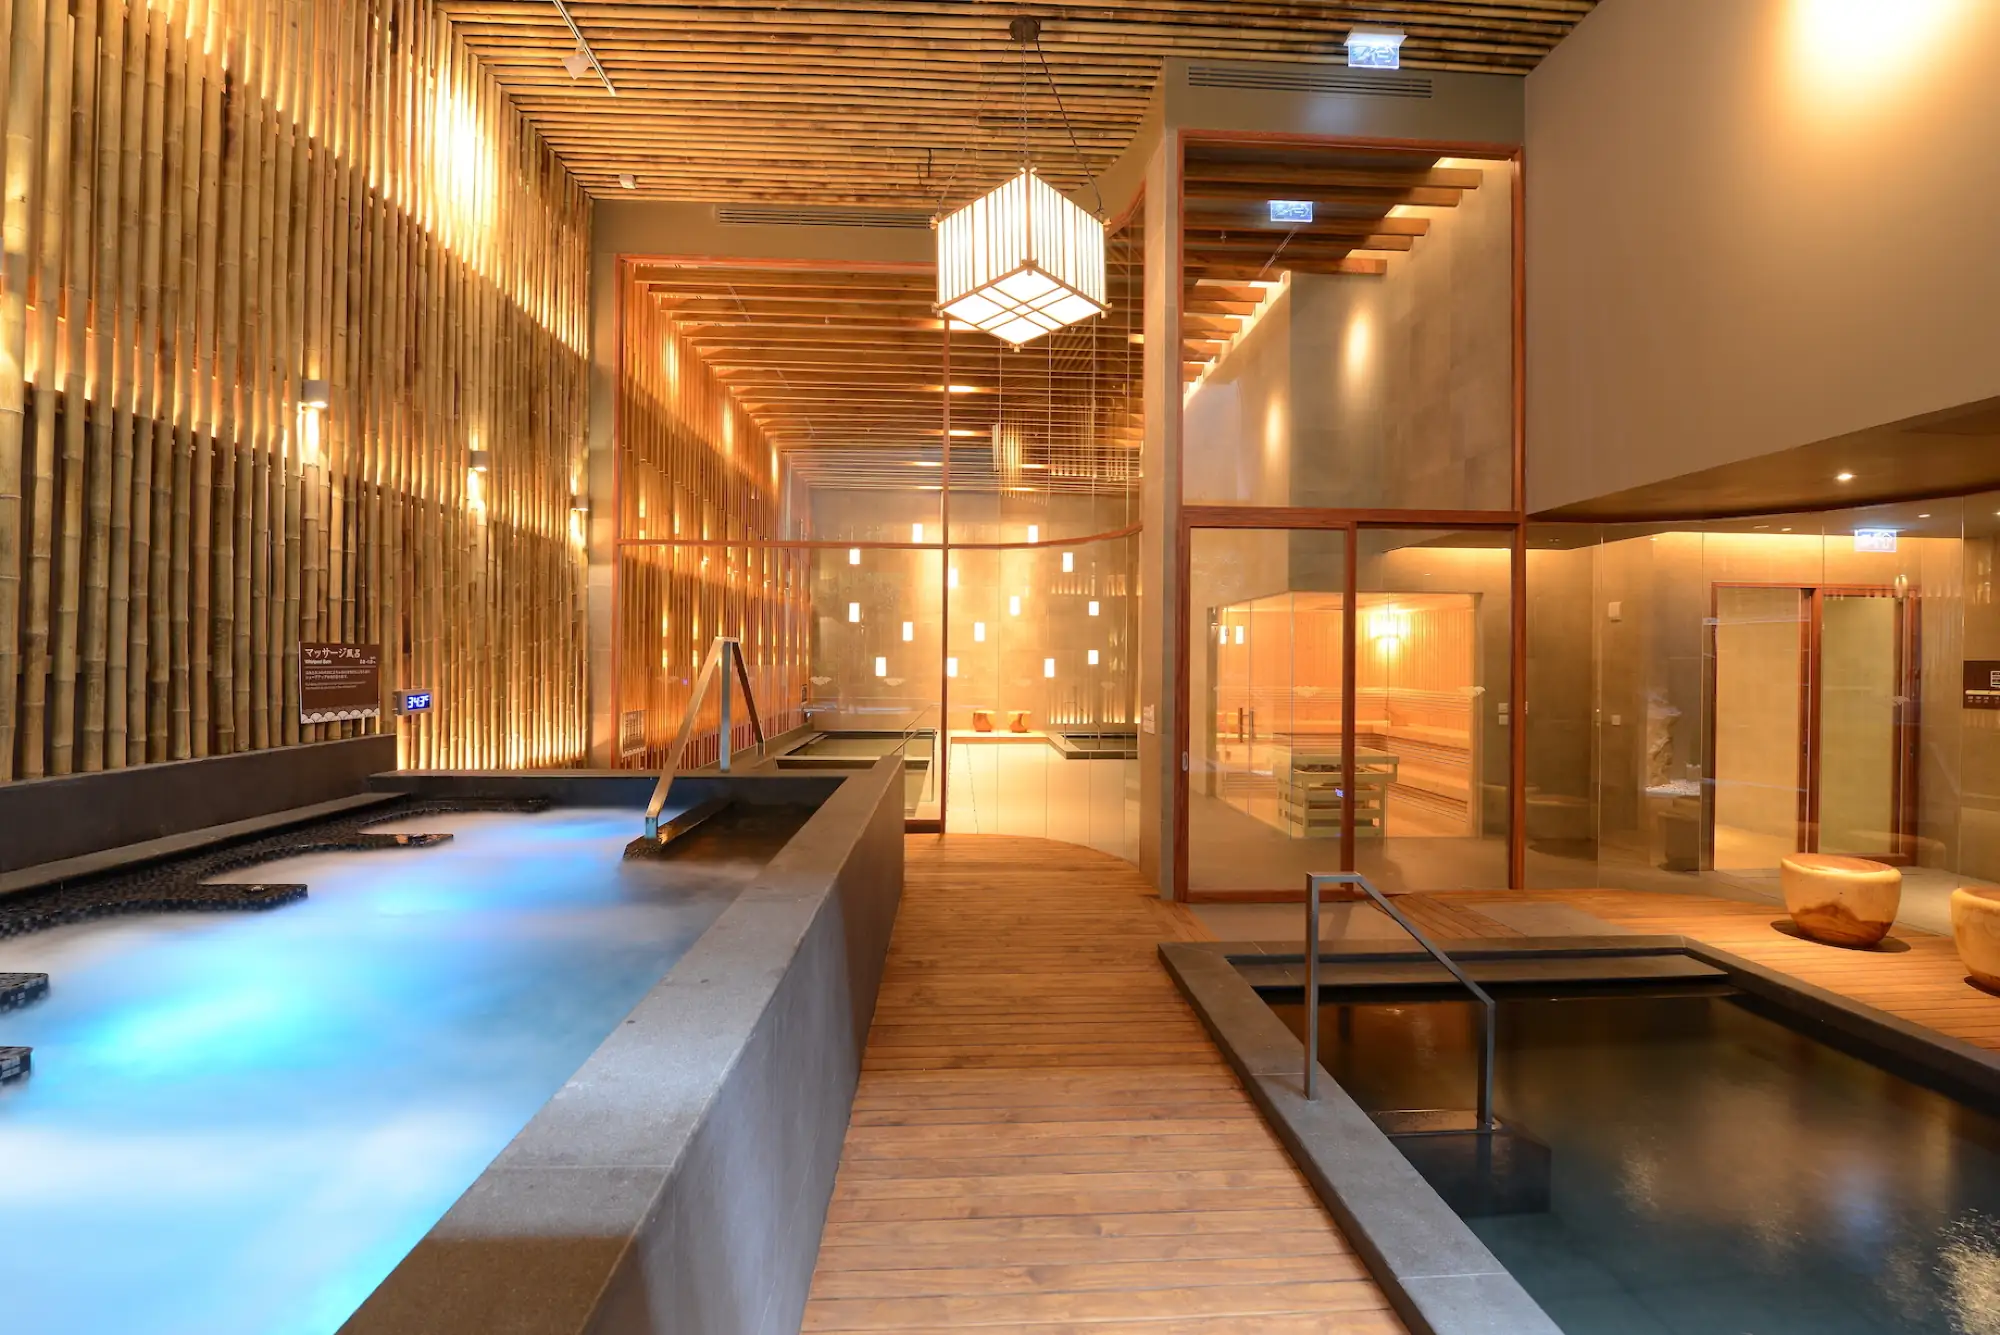 Let’s Relax Spa唯一一間溫泉按摩Spa就位在素坤逸中心55超豪華酒店5樓